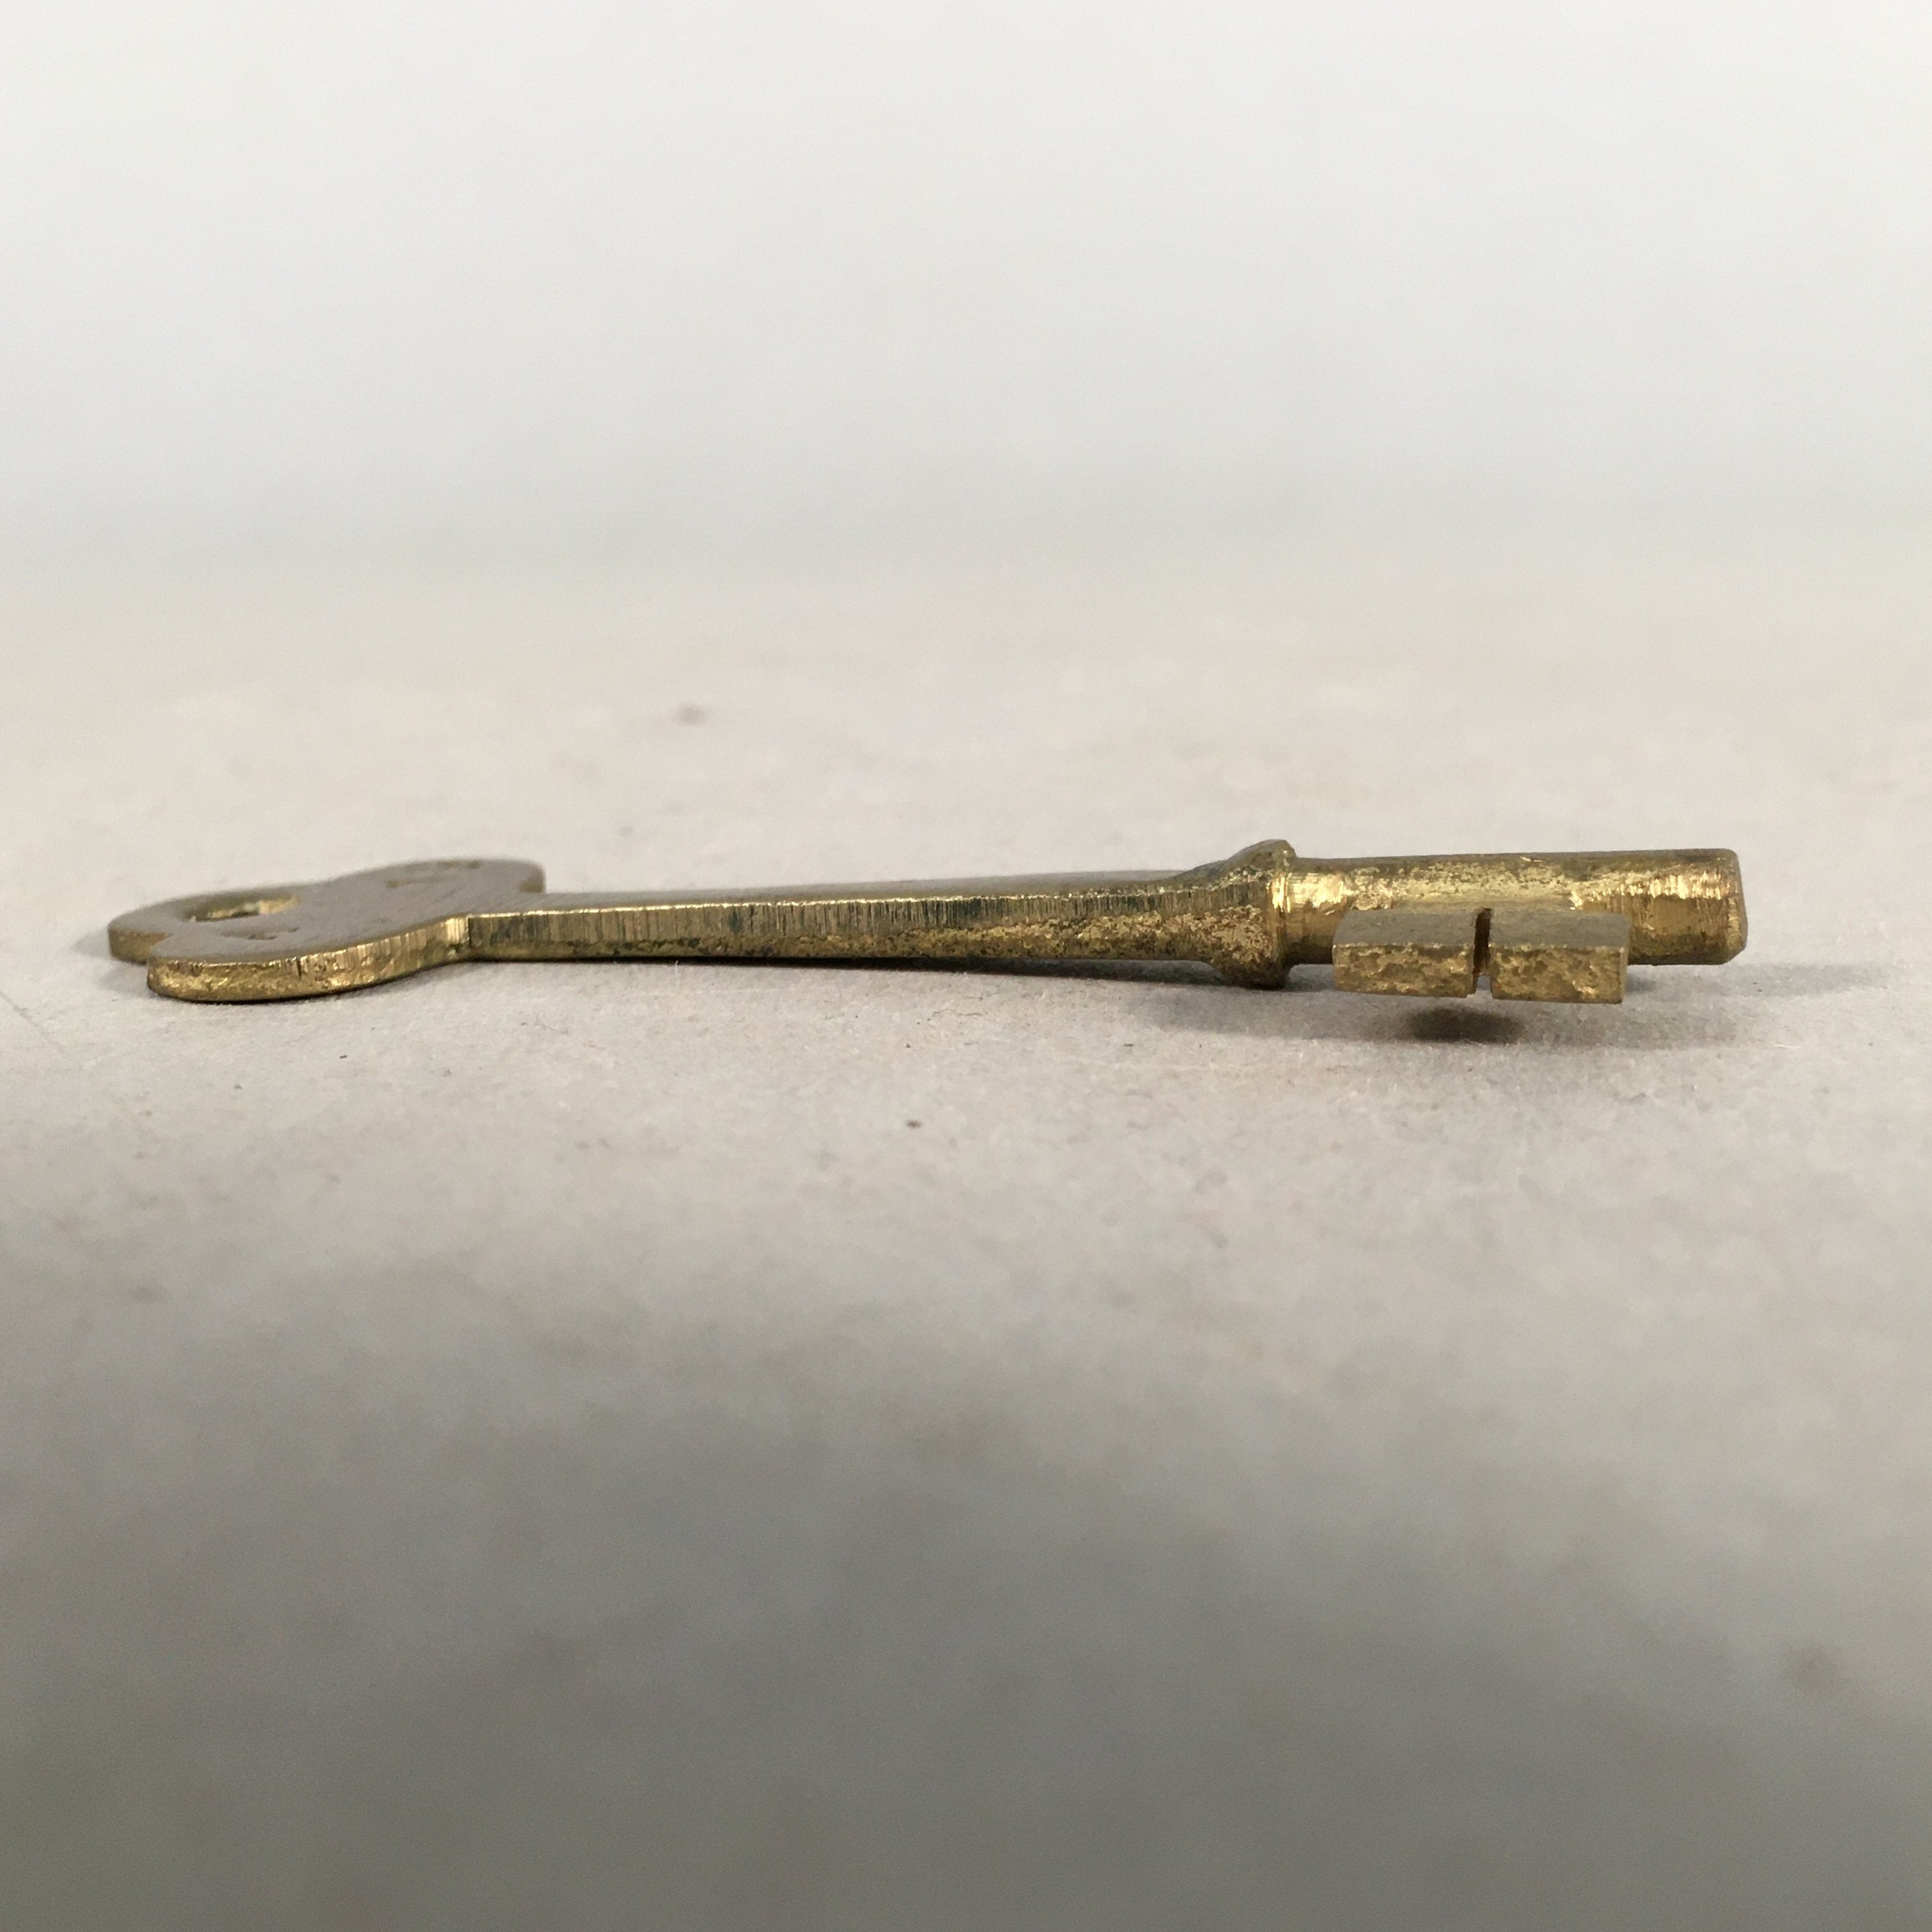 Japanese Metal Key Vtg C1930 Brass Gold 3 leaves JK23